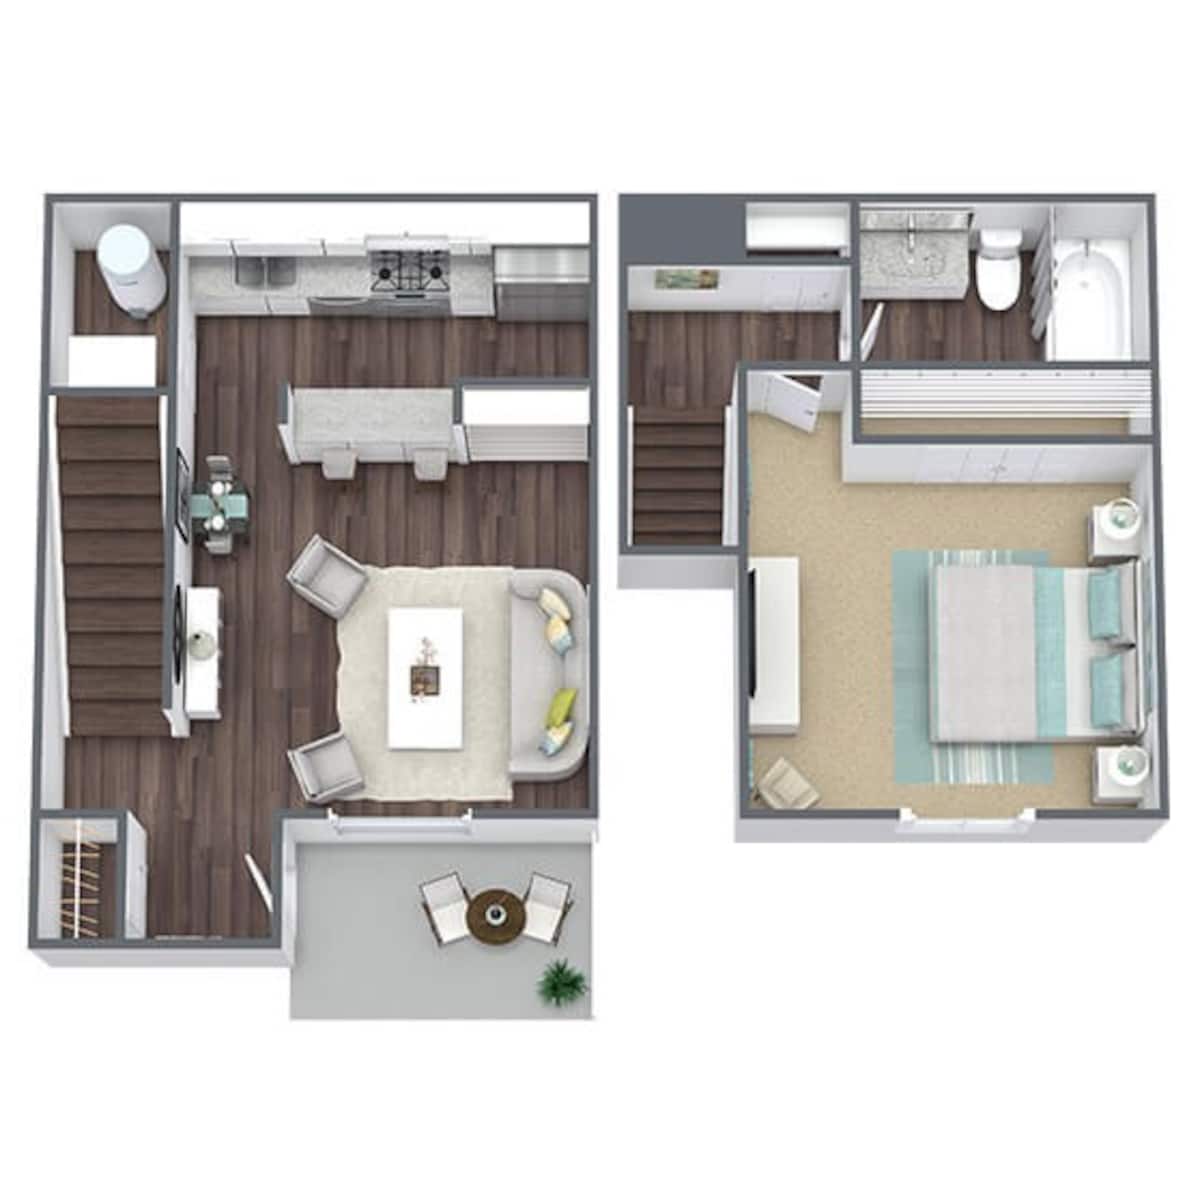 Floorplan diagram for A1 | Azalea Townhome, showing 1 bedroom